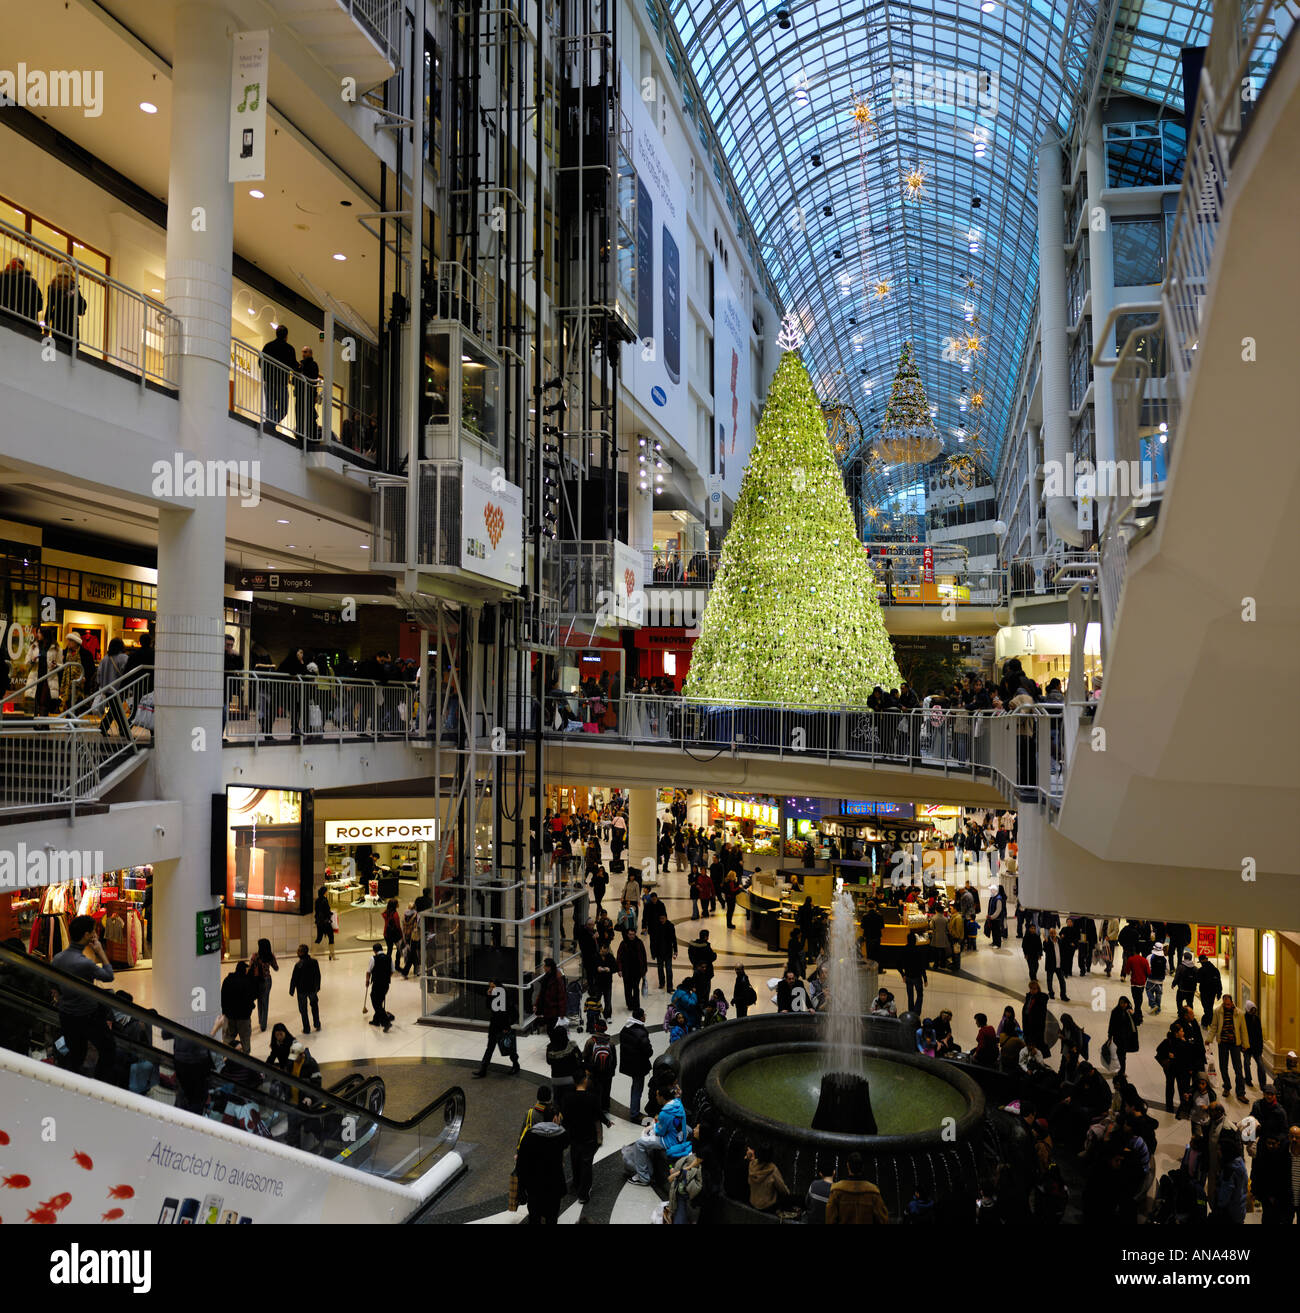 Toronto Eaton Centre Christmas decoration in a shopping mall Stock Photo